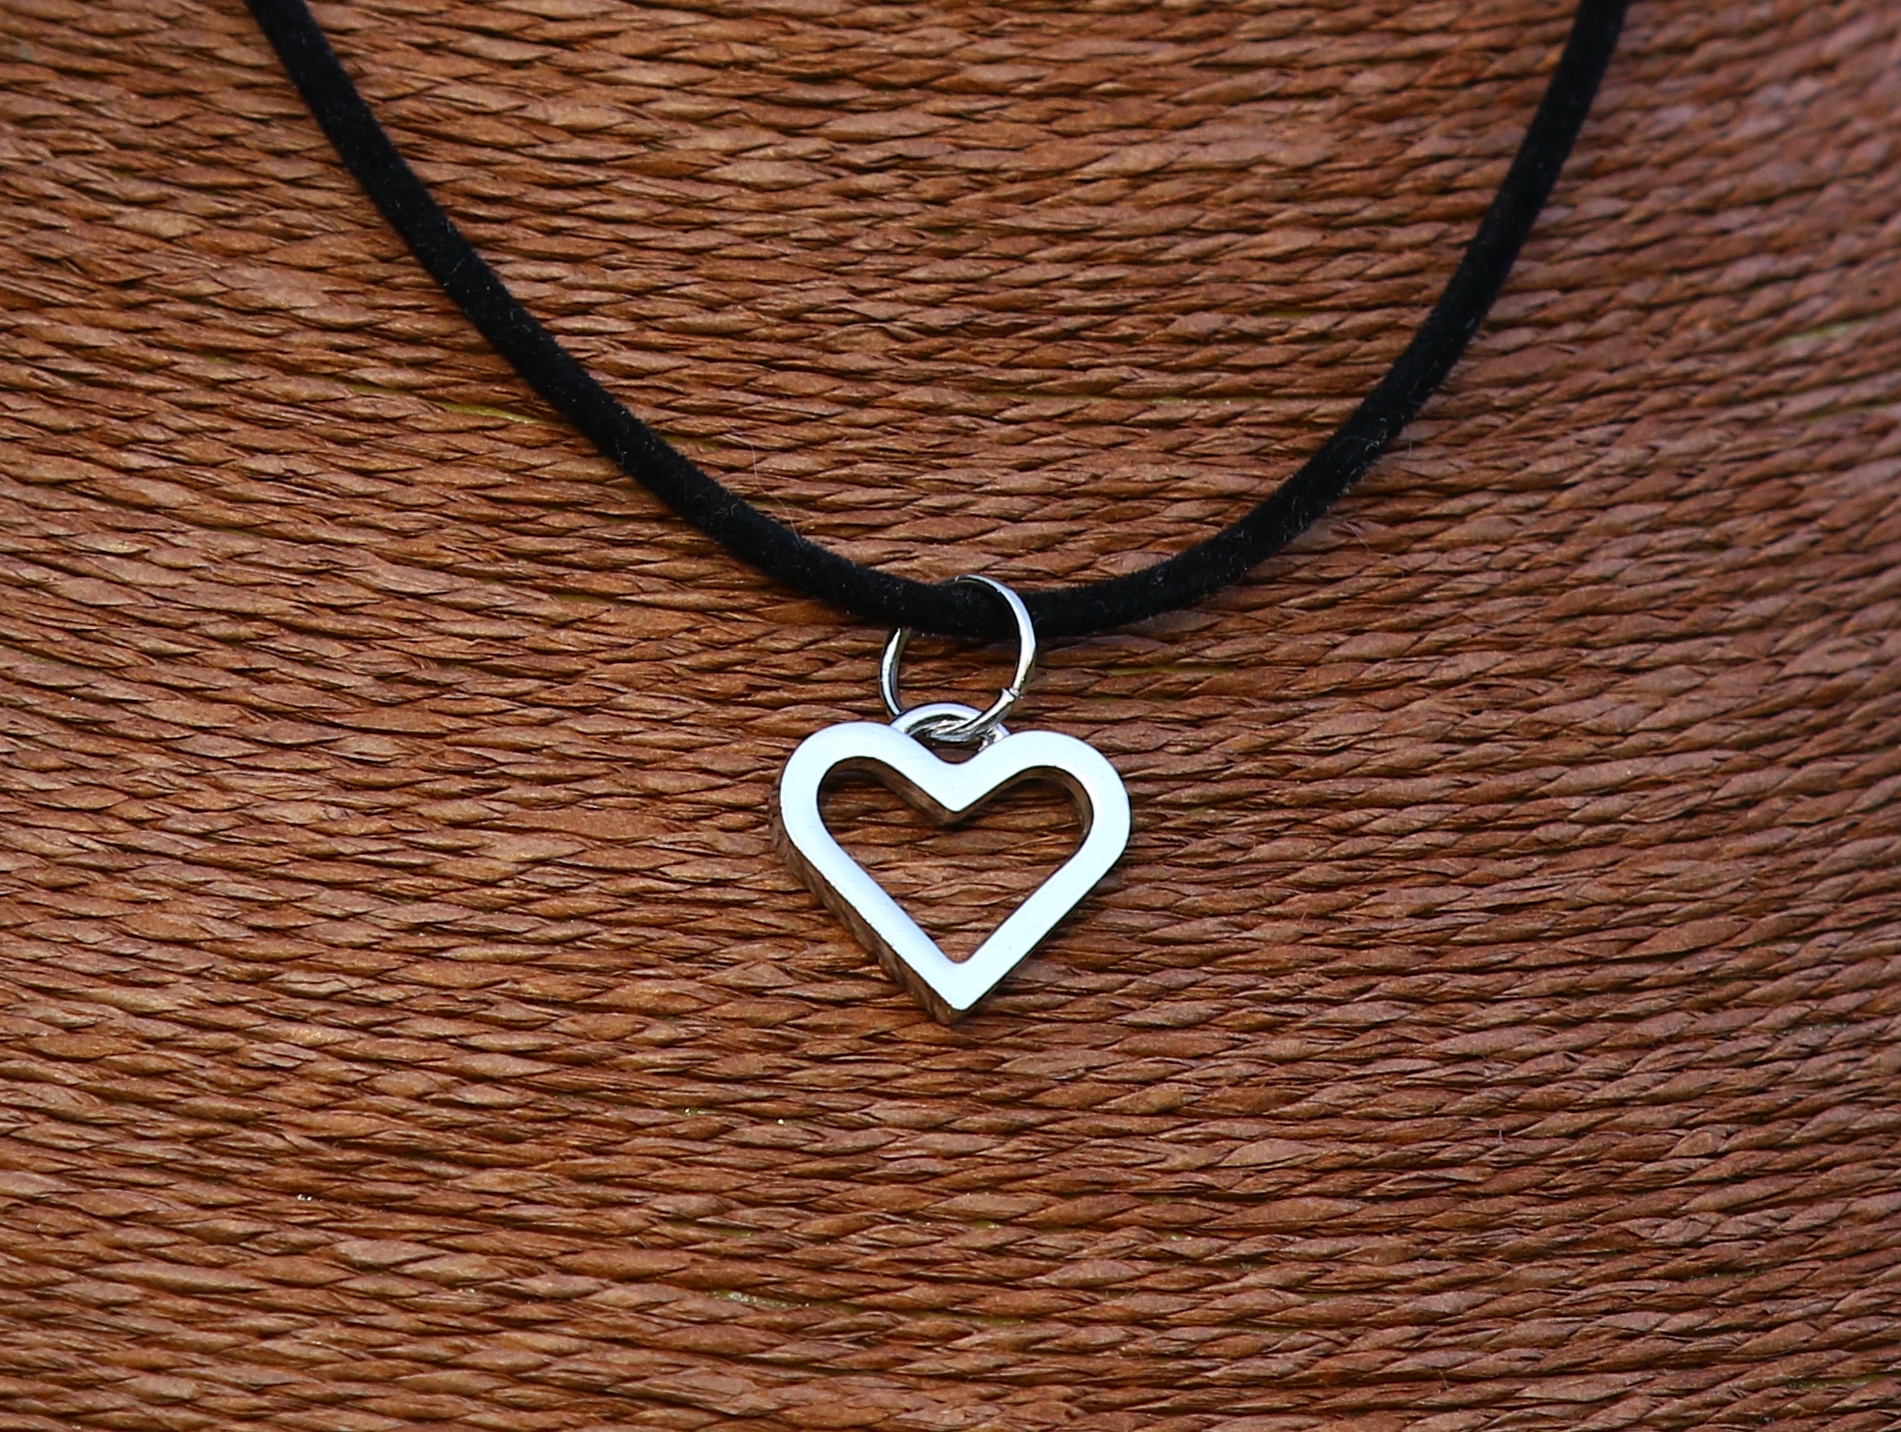 Little shiny heart necklace